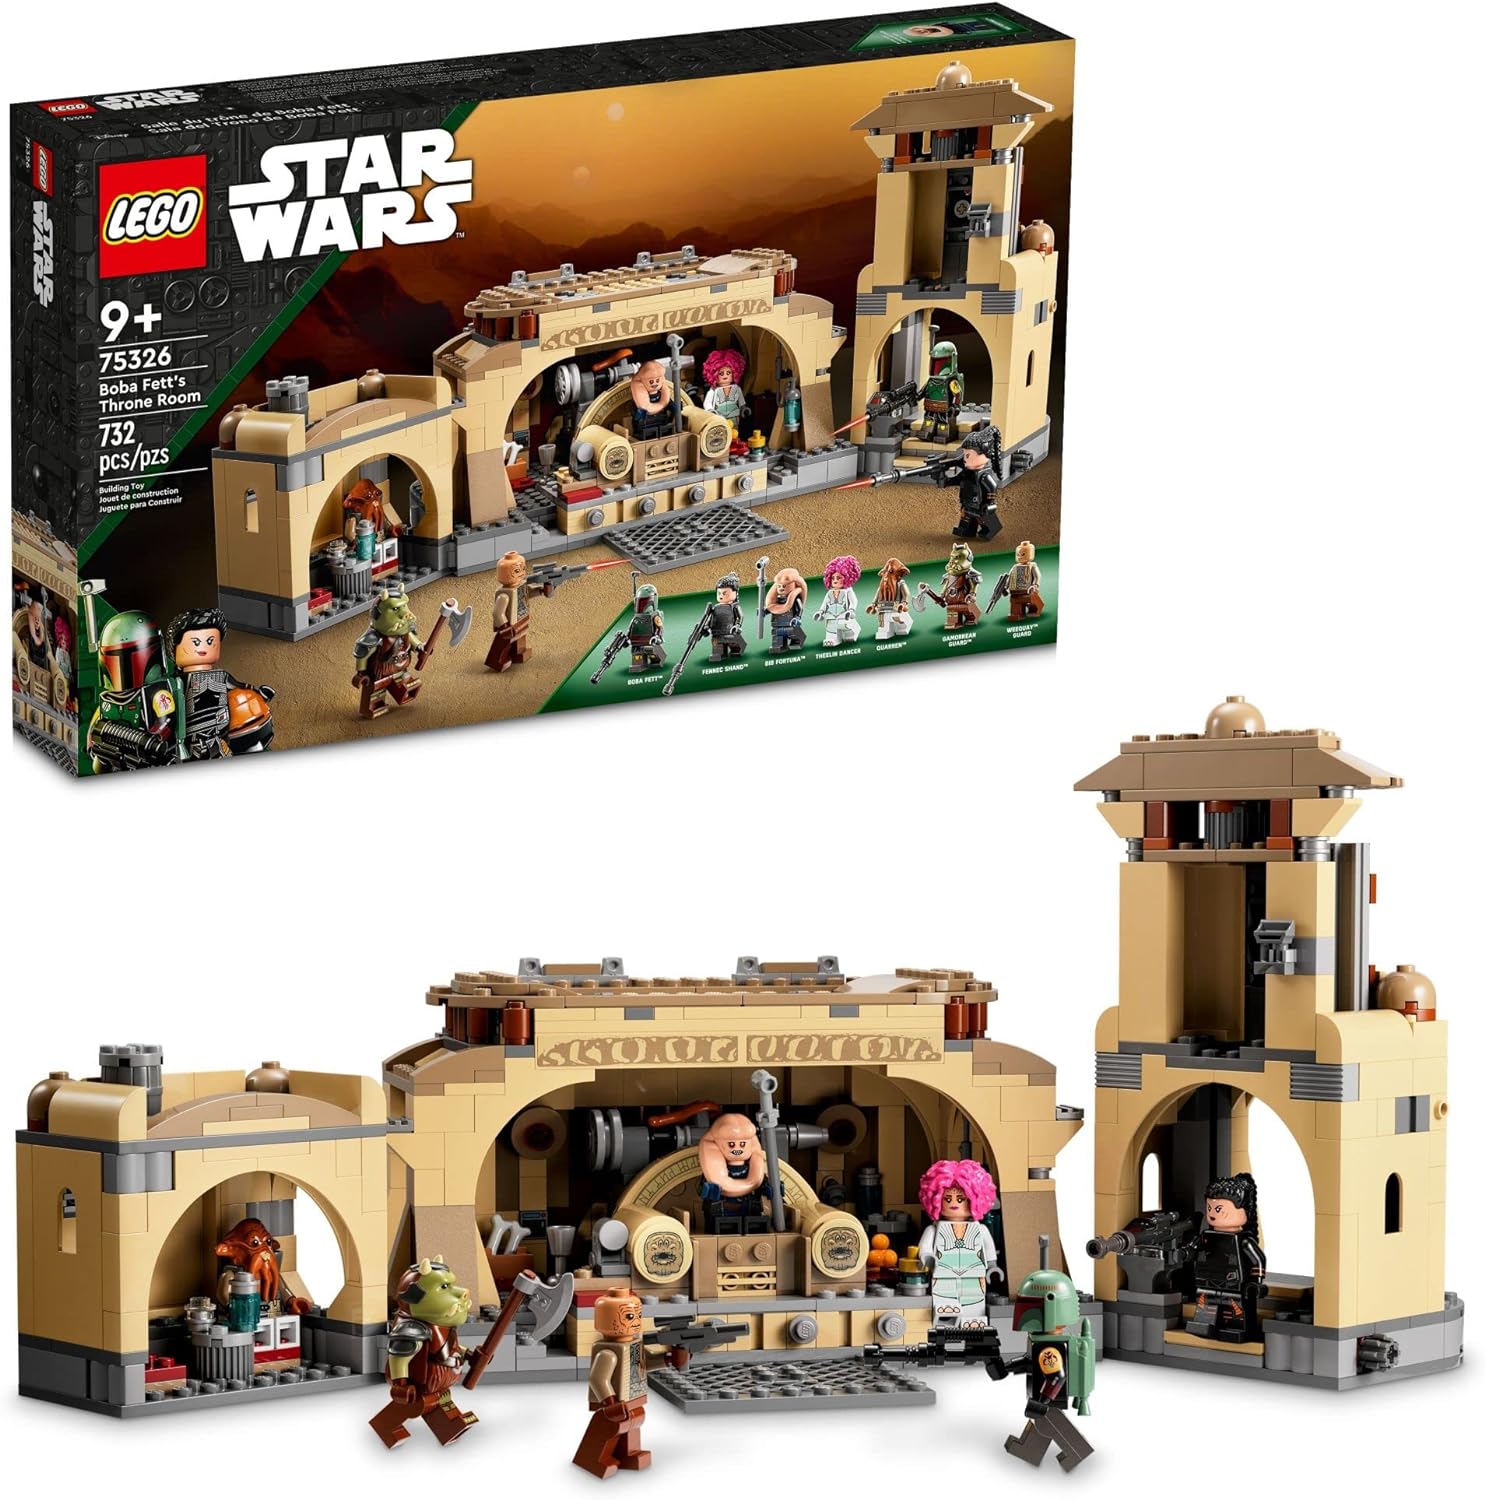 732-Piece LEGO Star Wars Boba Fett’s Throne Room Building Set (75326) $56.80 + Free Shipping